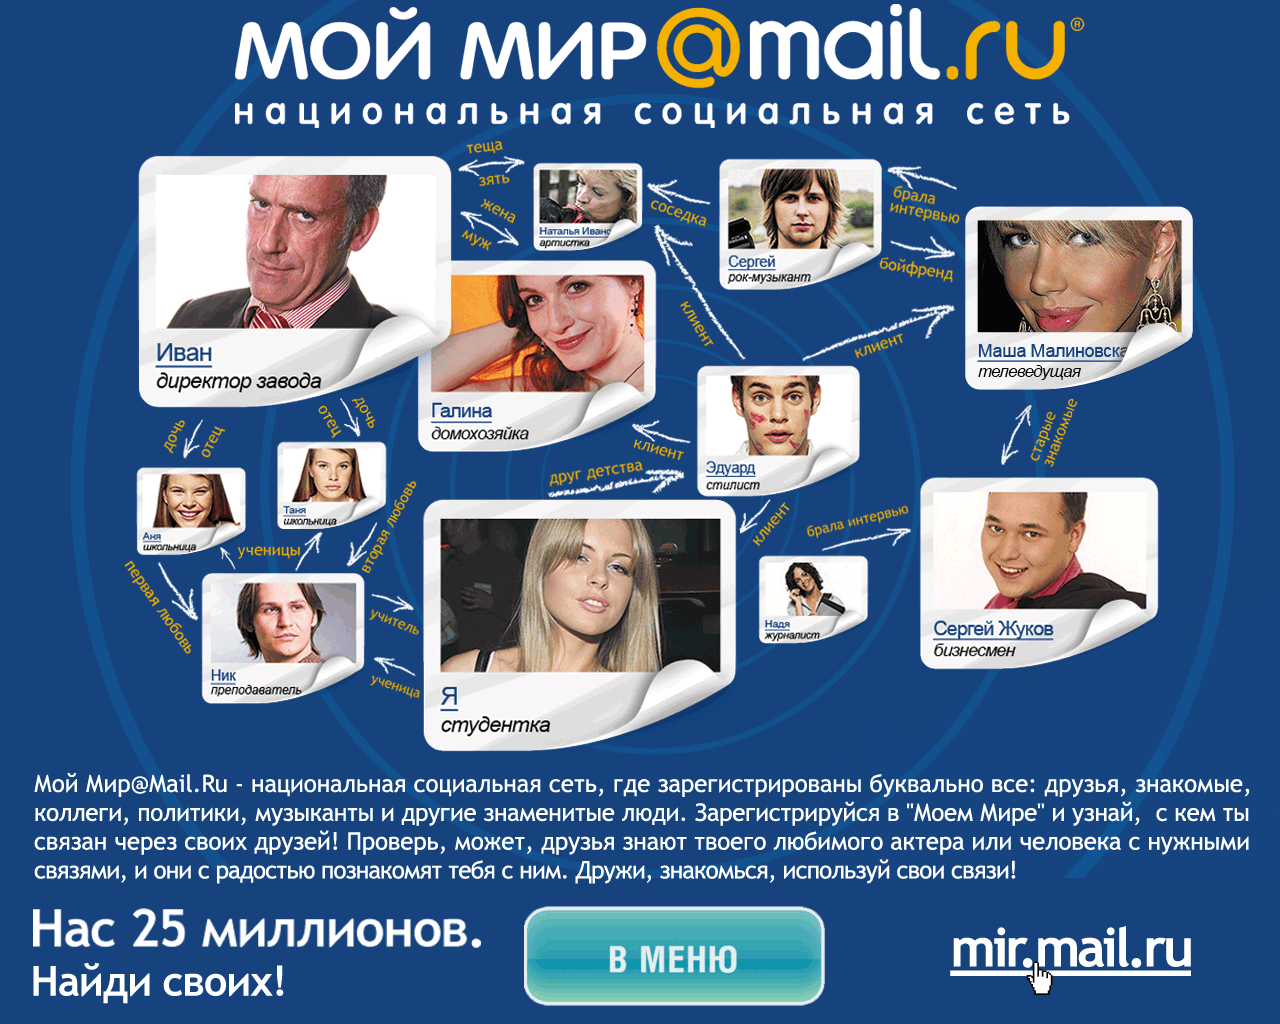 Мой мир. Мой мир@mail.ru. Mail мой мир. Соц сеть мой мир. Страницу в соцсетях по фото